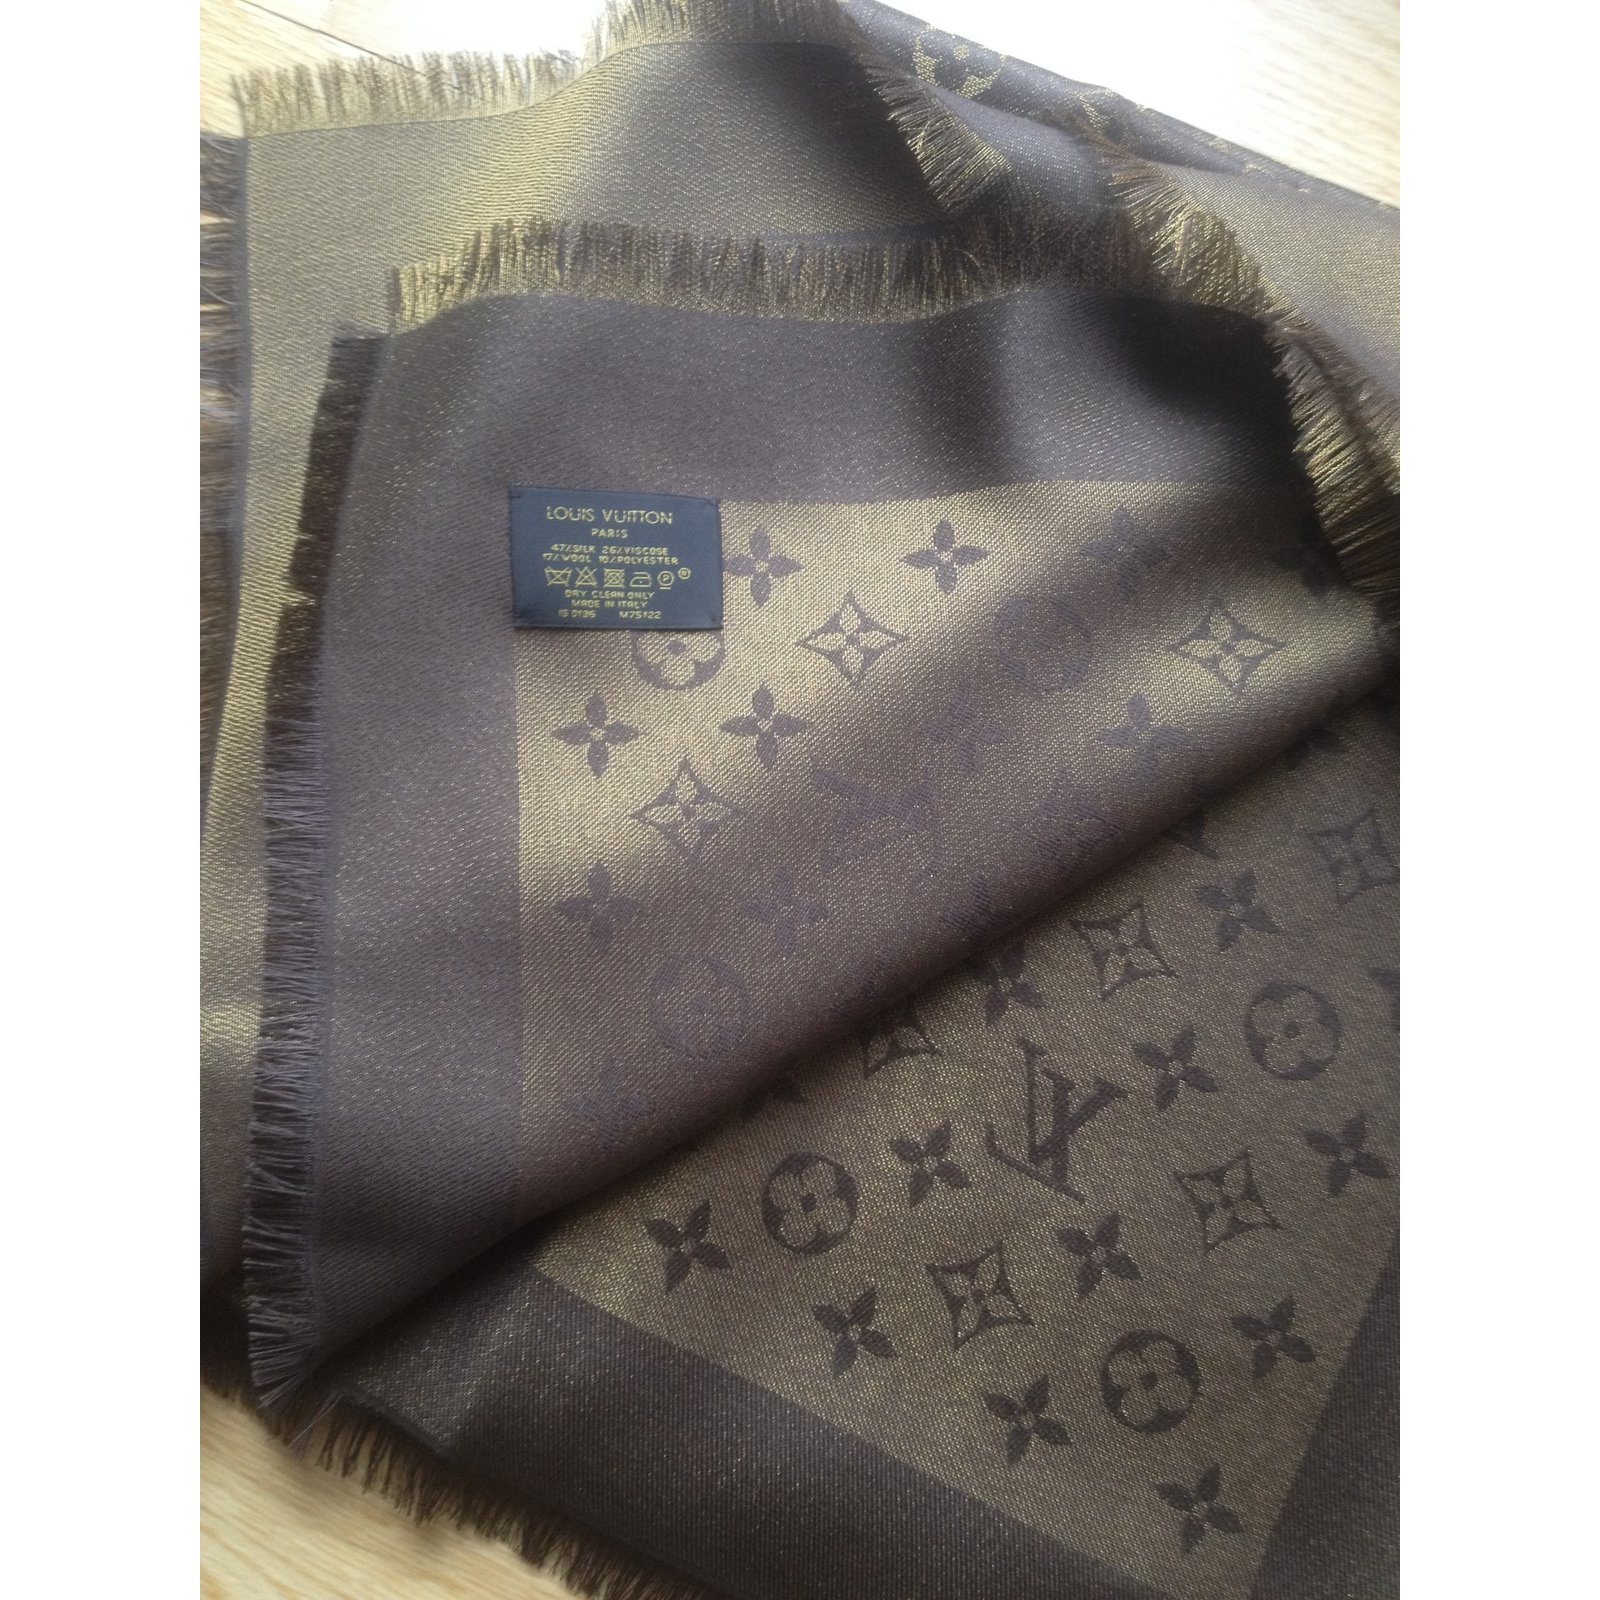 Lot - Louis Vuitton Paris 65% wool 35% cashmere vintage designer brown  monogram scarf with metallic thread and original tag. 75H x 28W